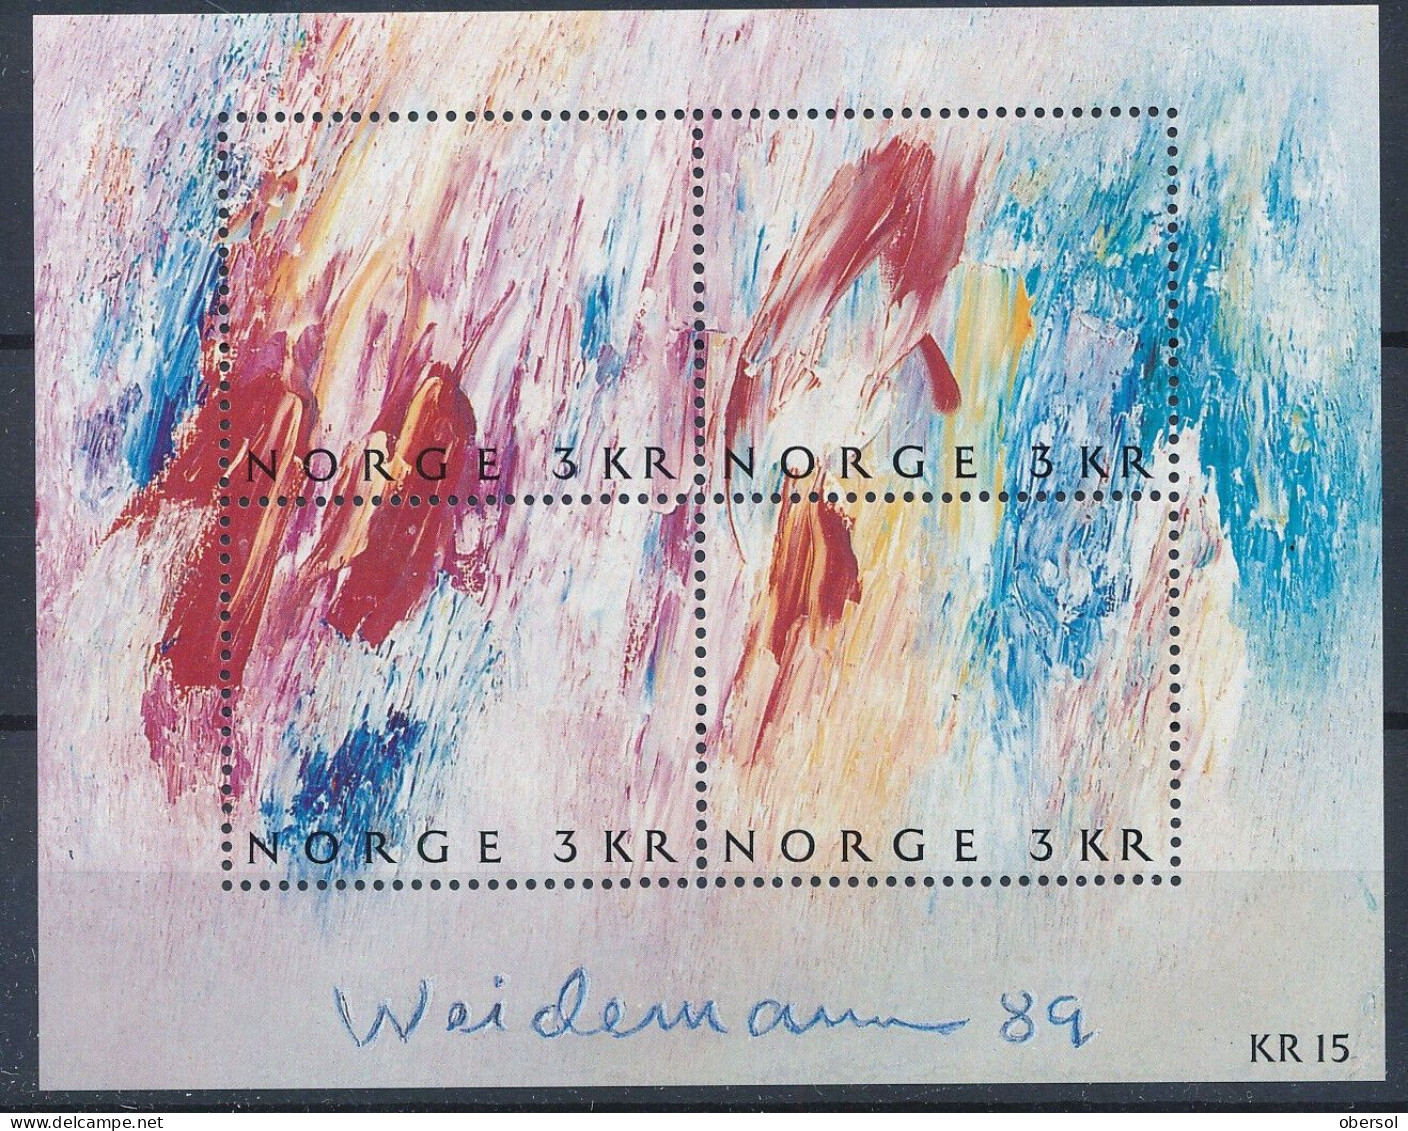 Norway 1989 Art, Paintings Complete Souvenir Sheet MNH - Ongebruikt